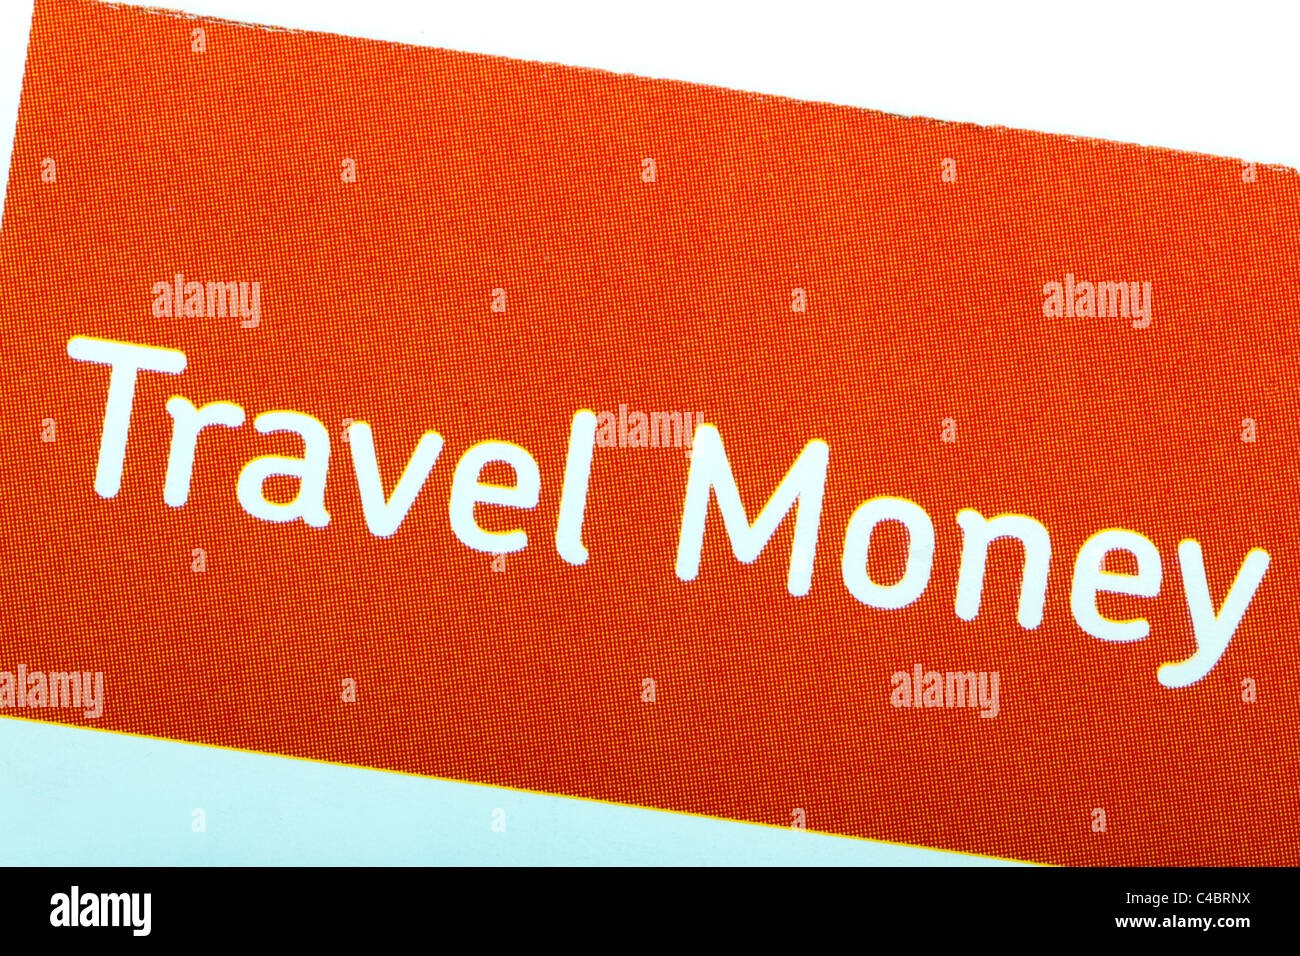 Travel money sign in orange with white writing Stock Photo